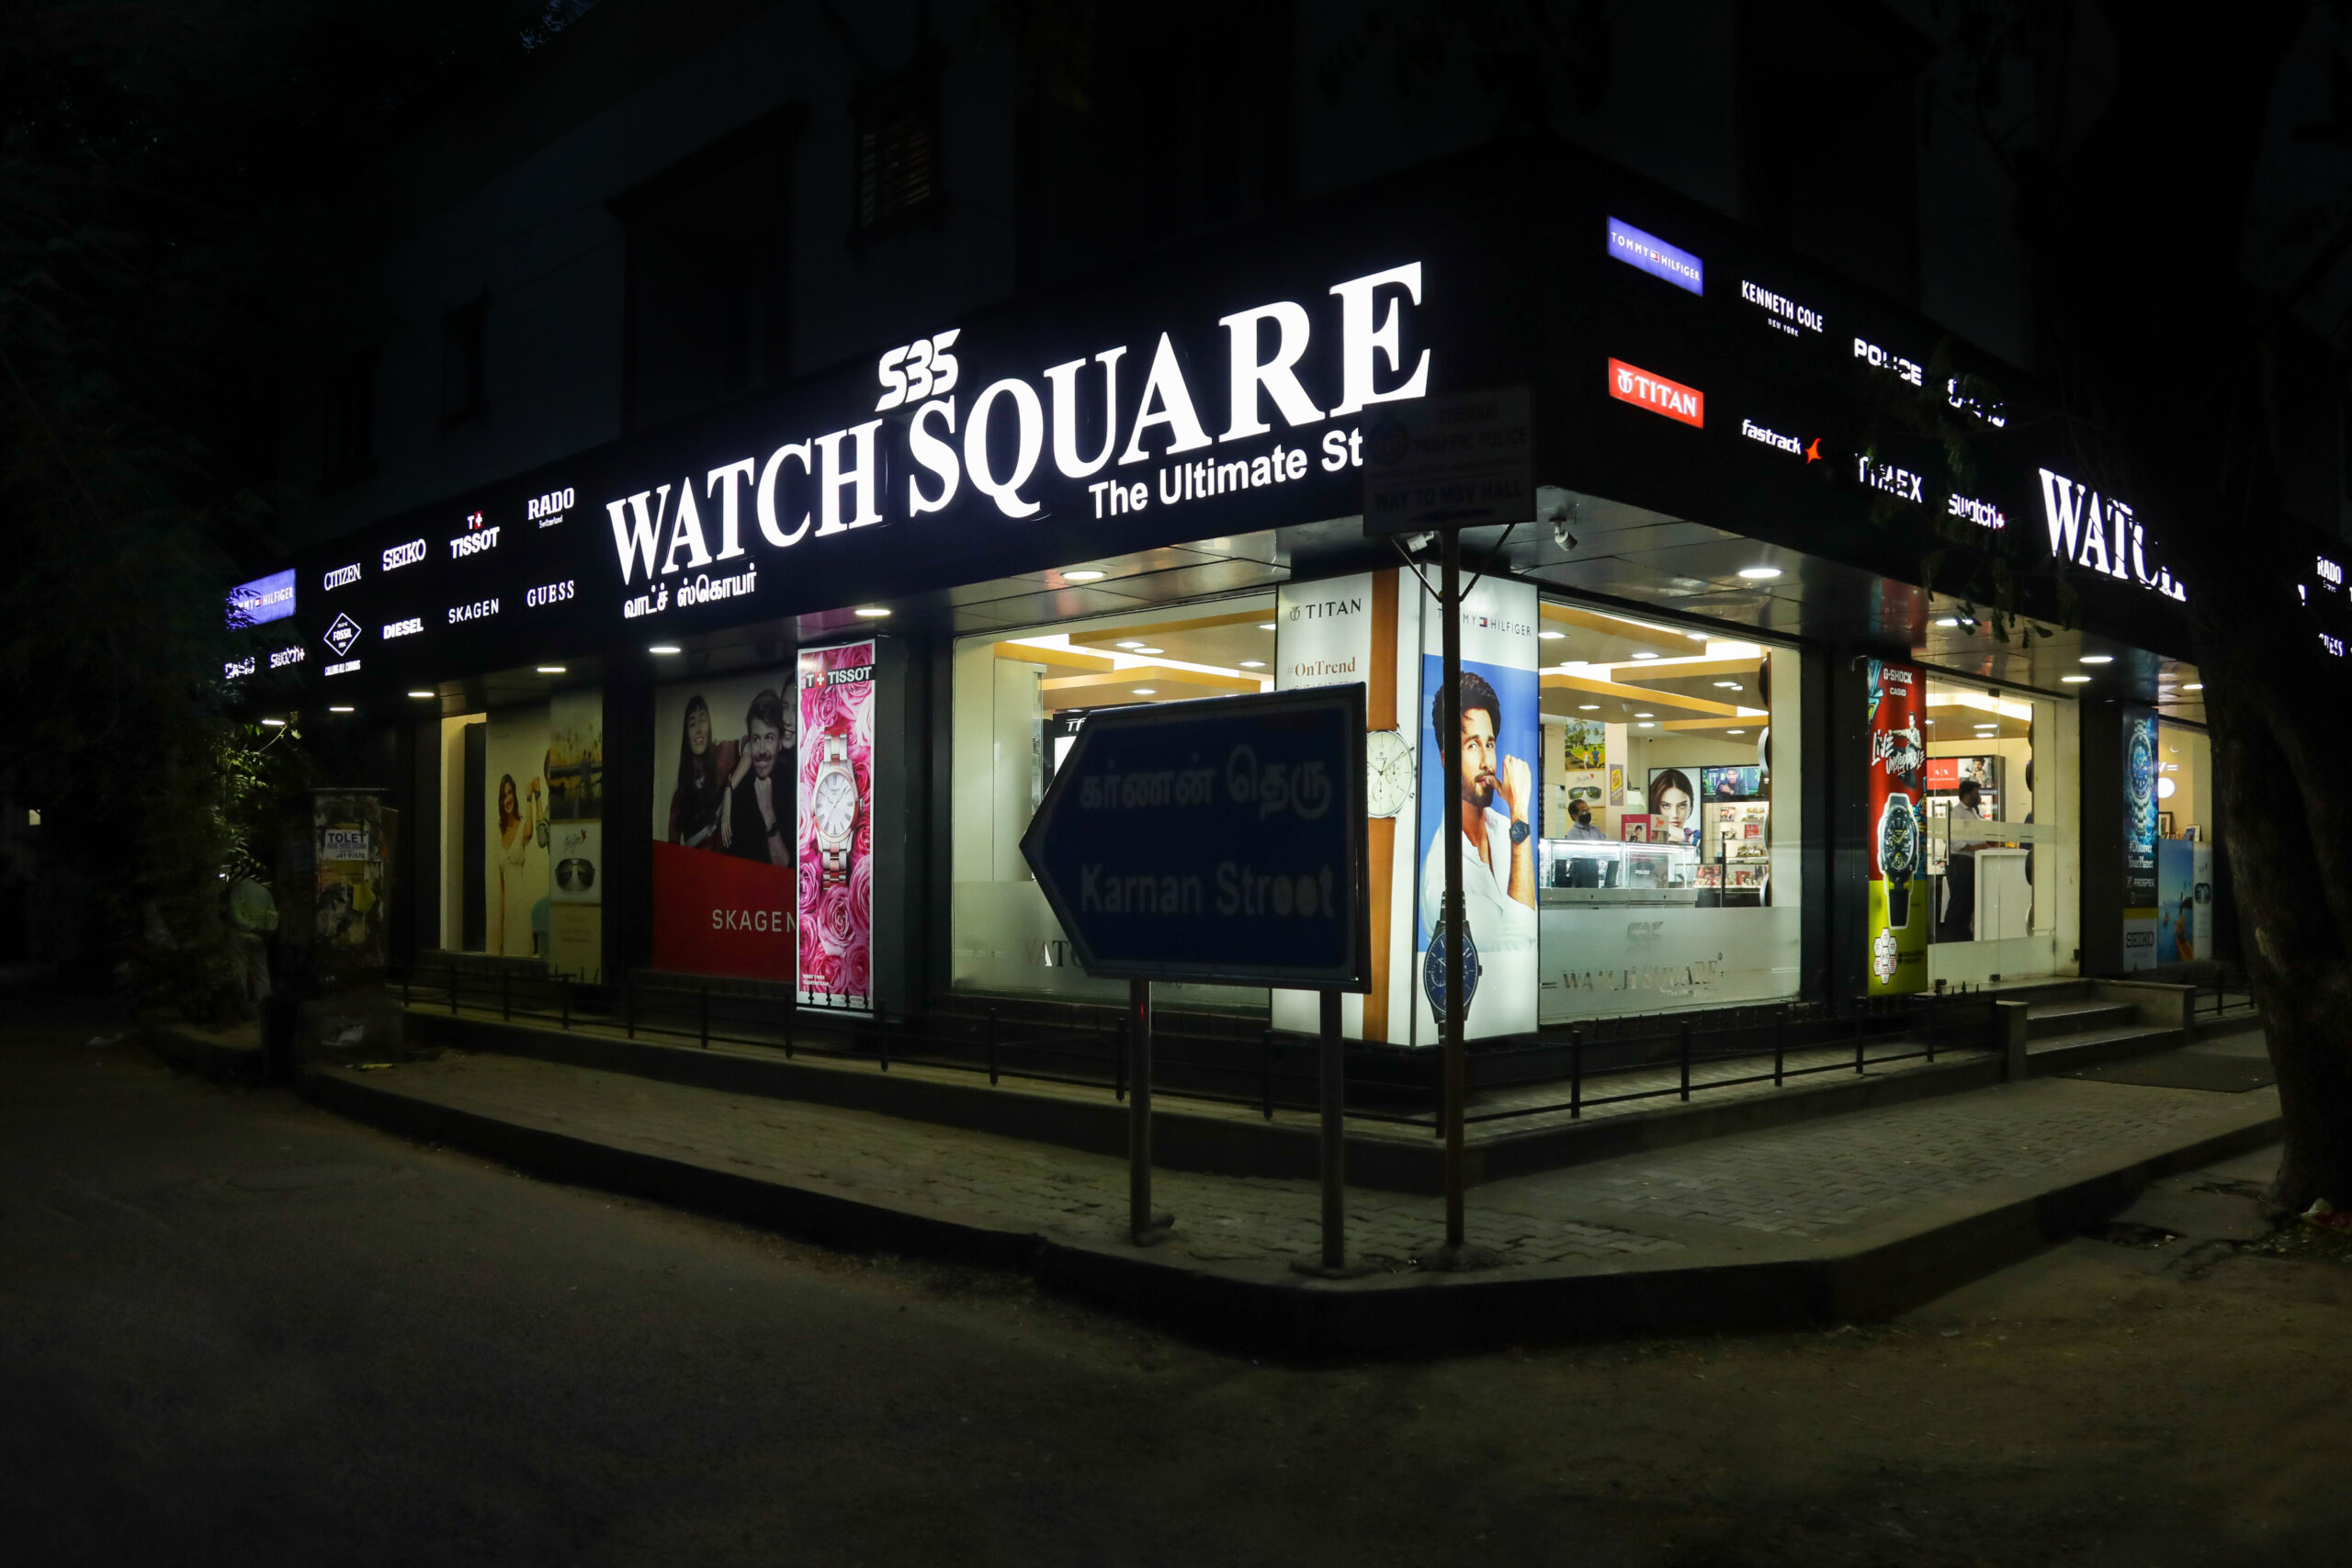 Swiss Watch Collection in Park Town,Chennai - Best Casio-Wrist Watch  Dealers in Chennai - Justdial